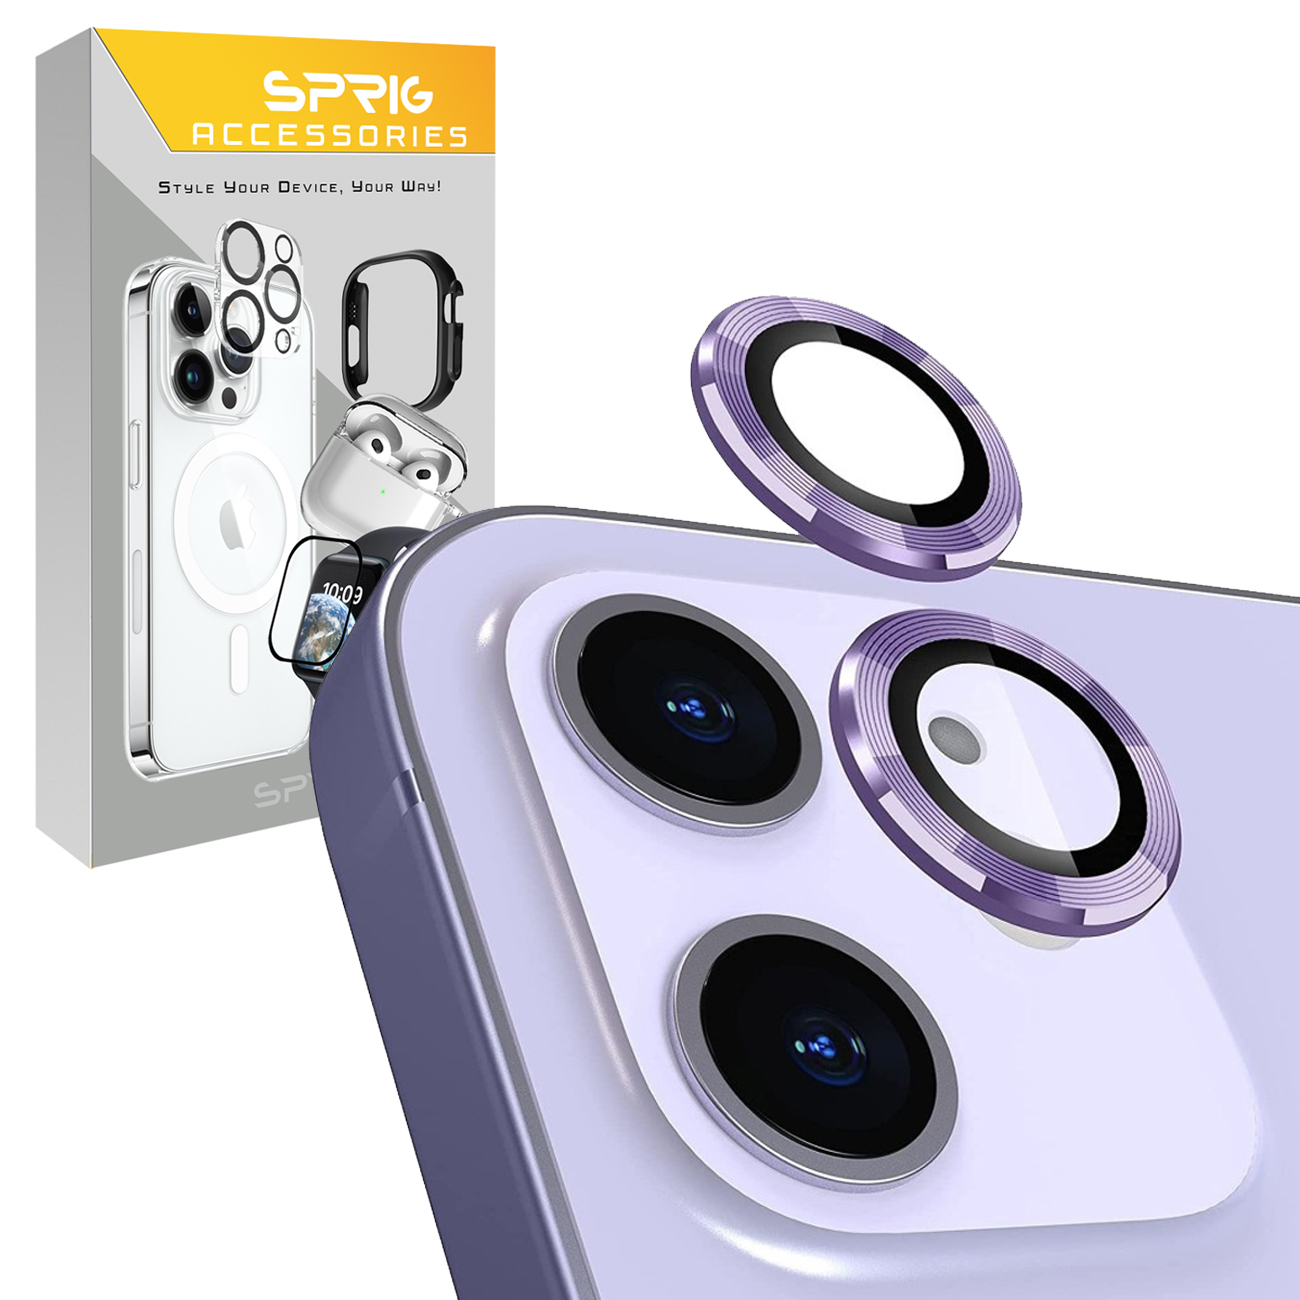 محافظ لنز دوربین اسپریگ مدل Metal-Ring مناسب برای گوشی موبایل اپل iPhone 12